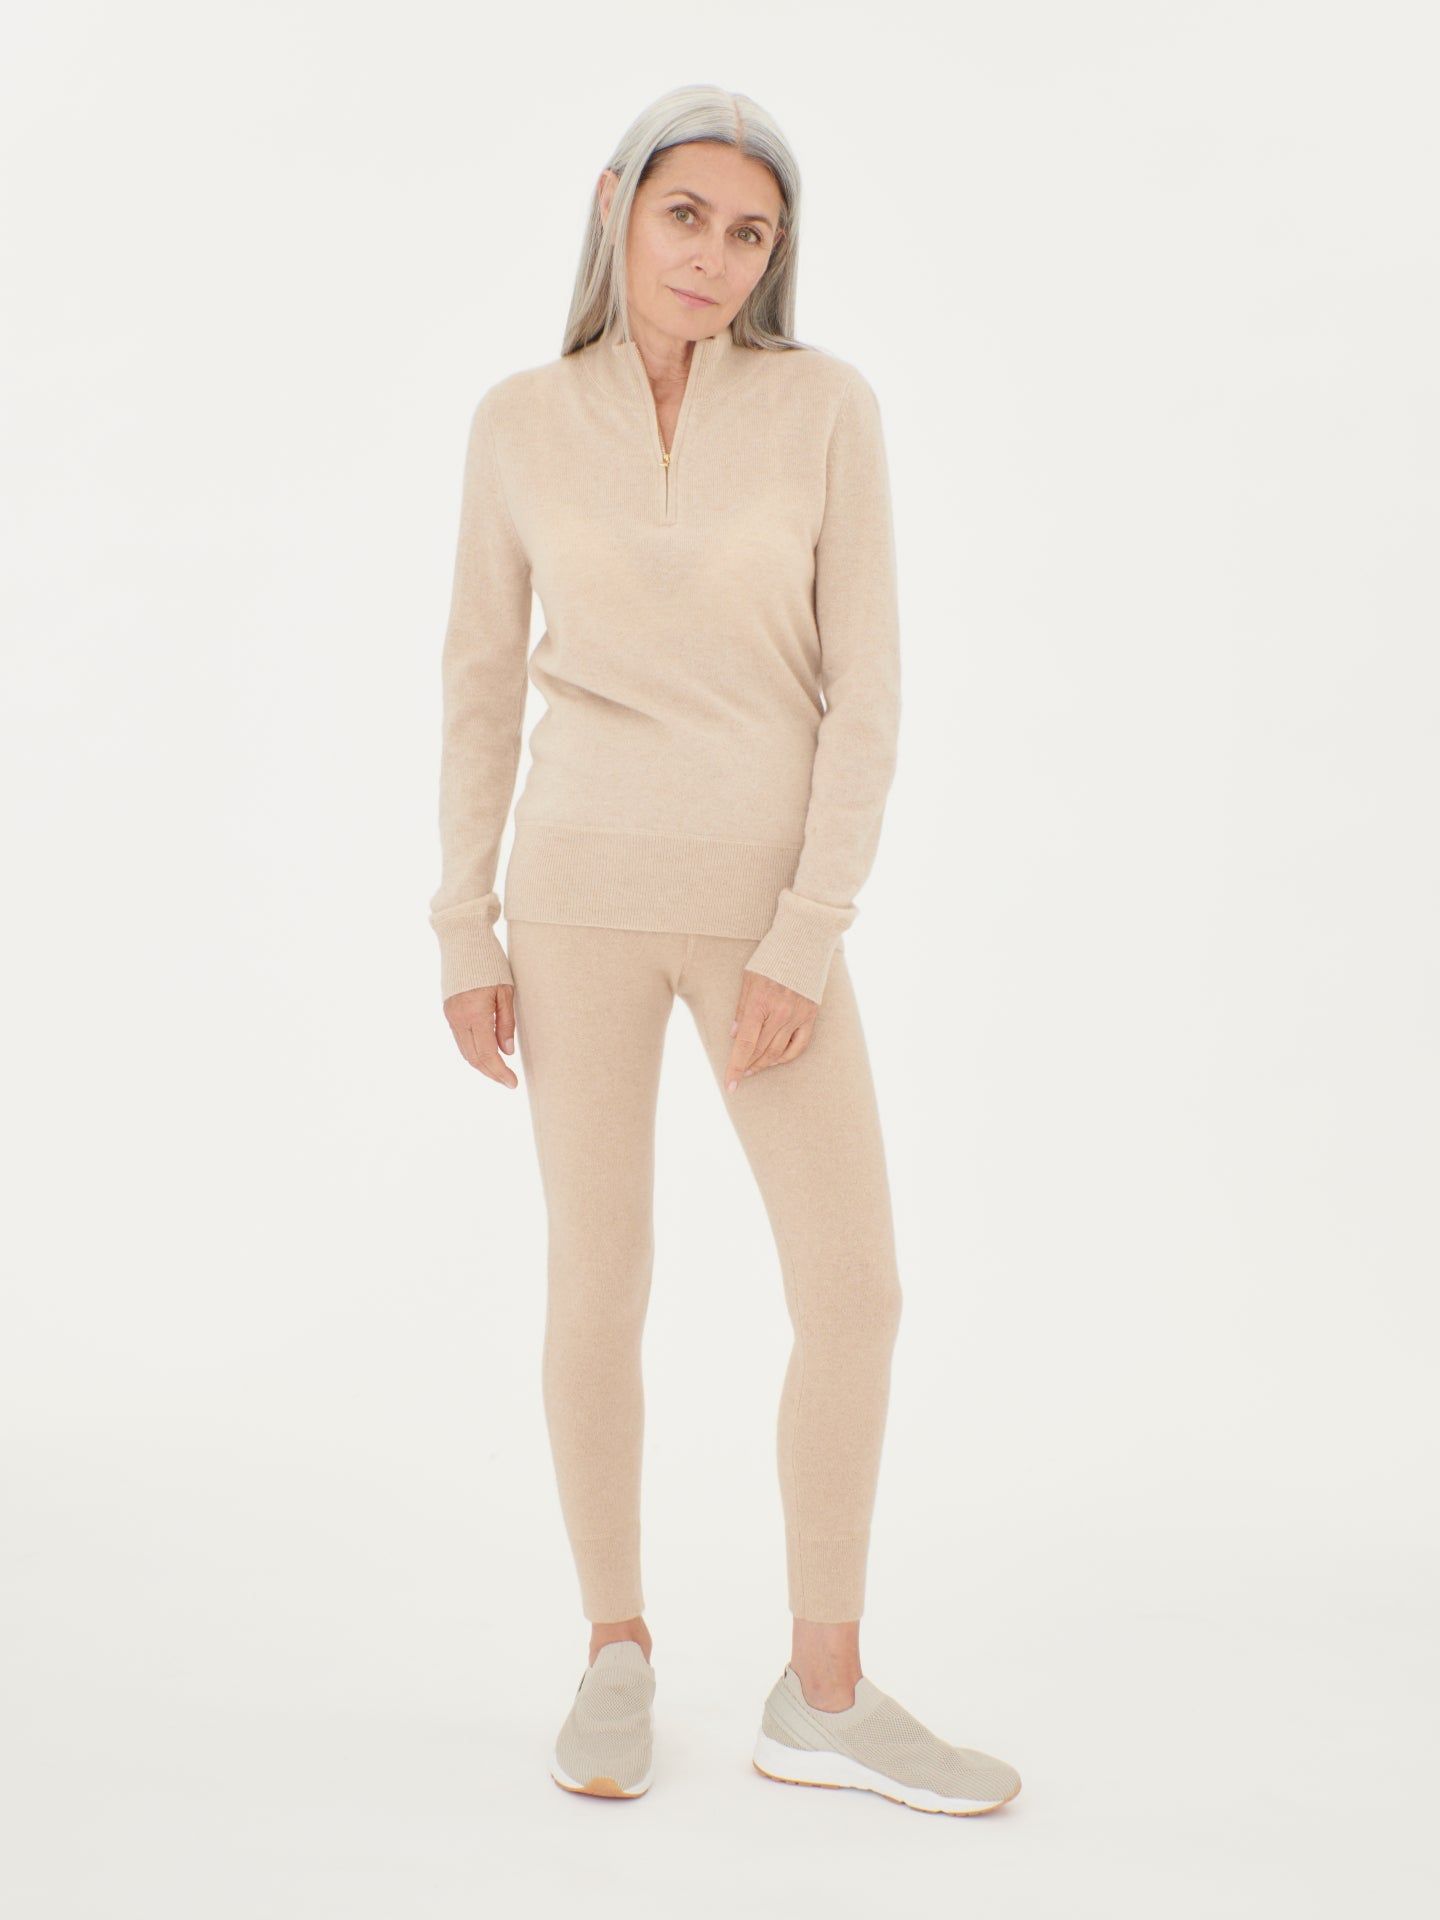 Women's Cashmere Zipped High Neck Sweater Beige - Gobi Cashmere